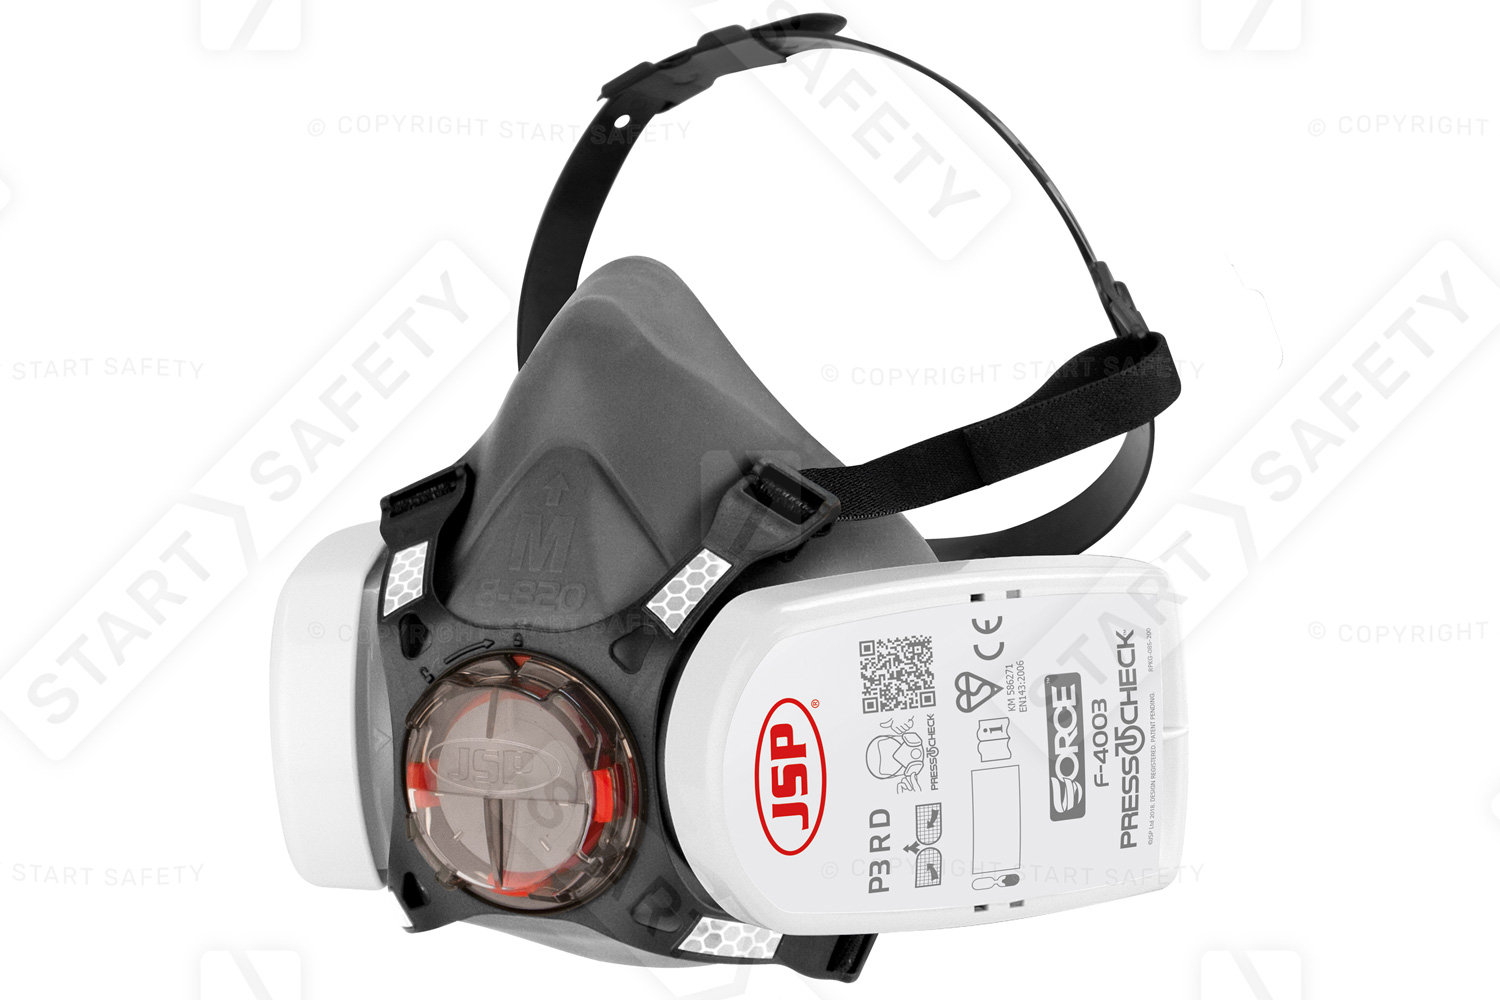 Force8 Half Mask Respirator